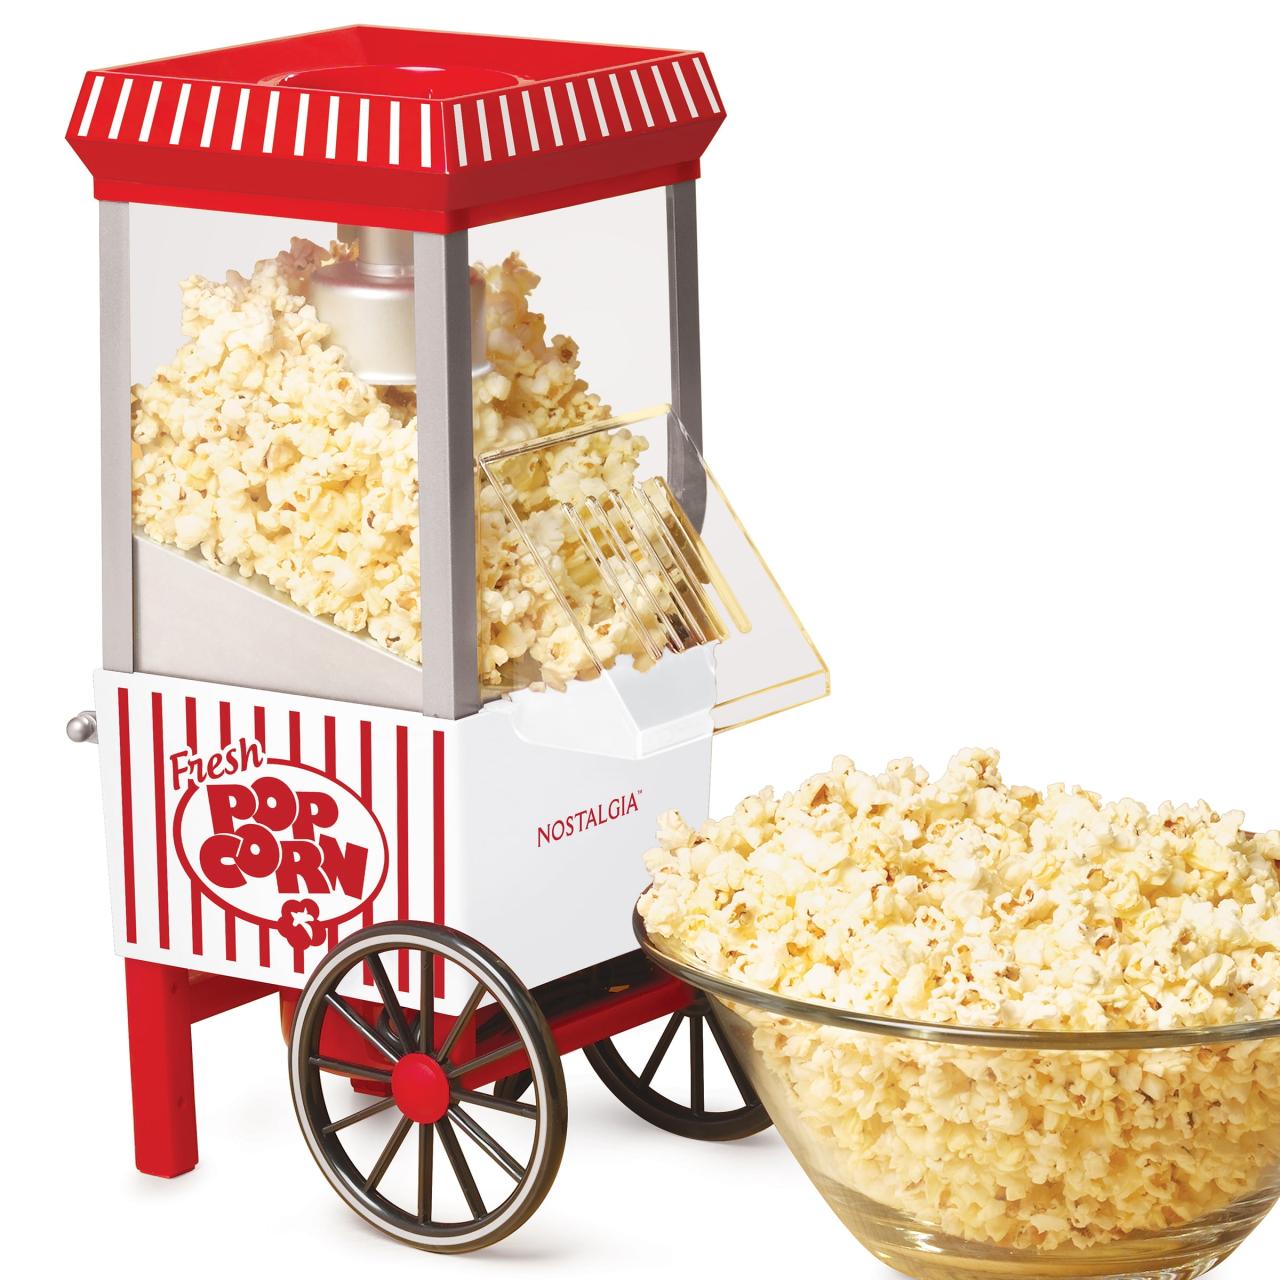 Old Fashioned Popcorn Makers: A Nostalgic Journey into Popcorn History